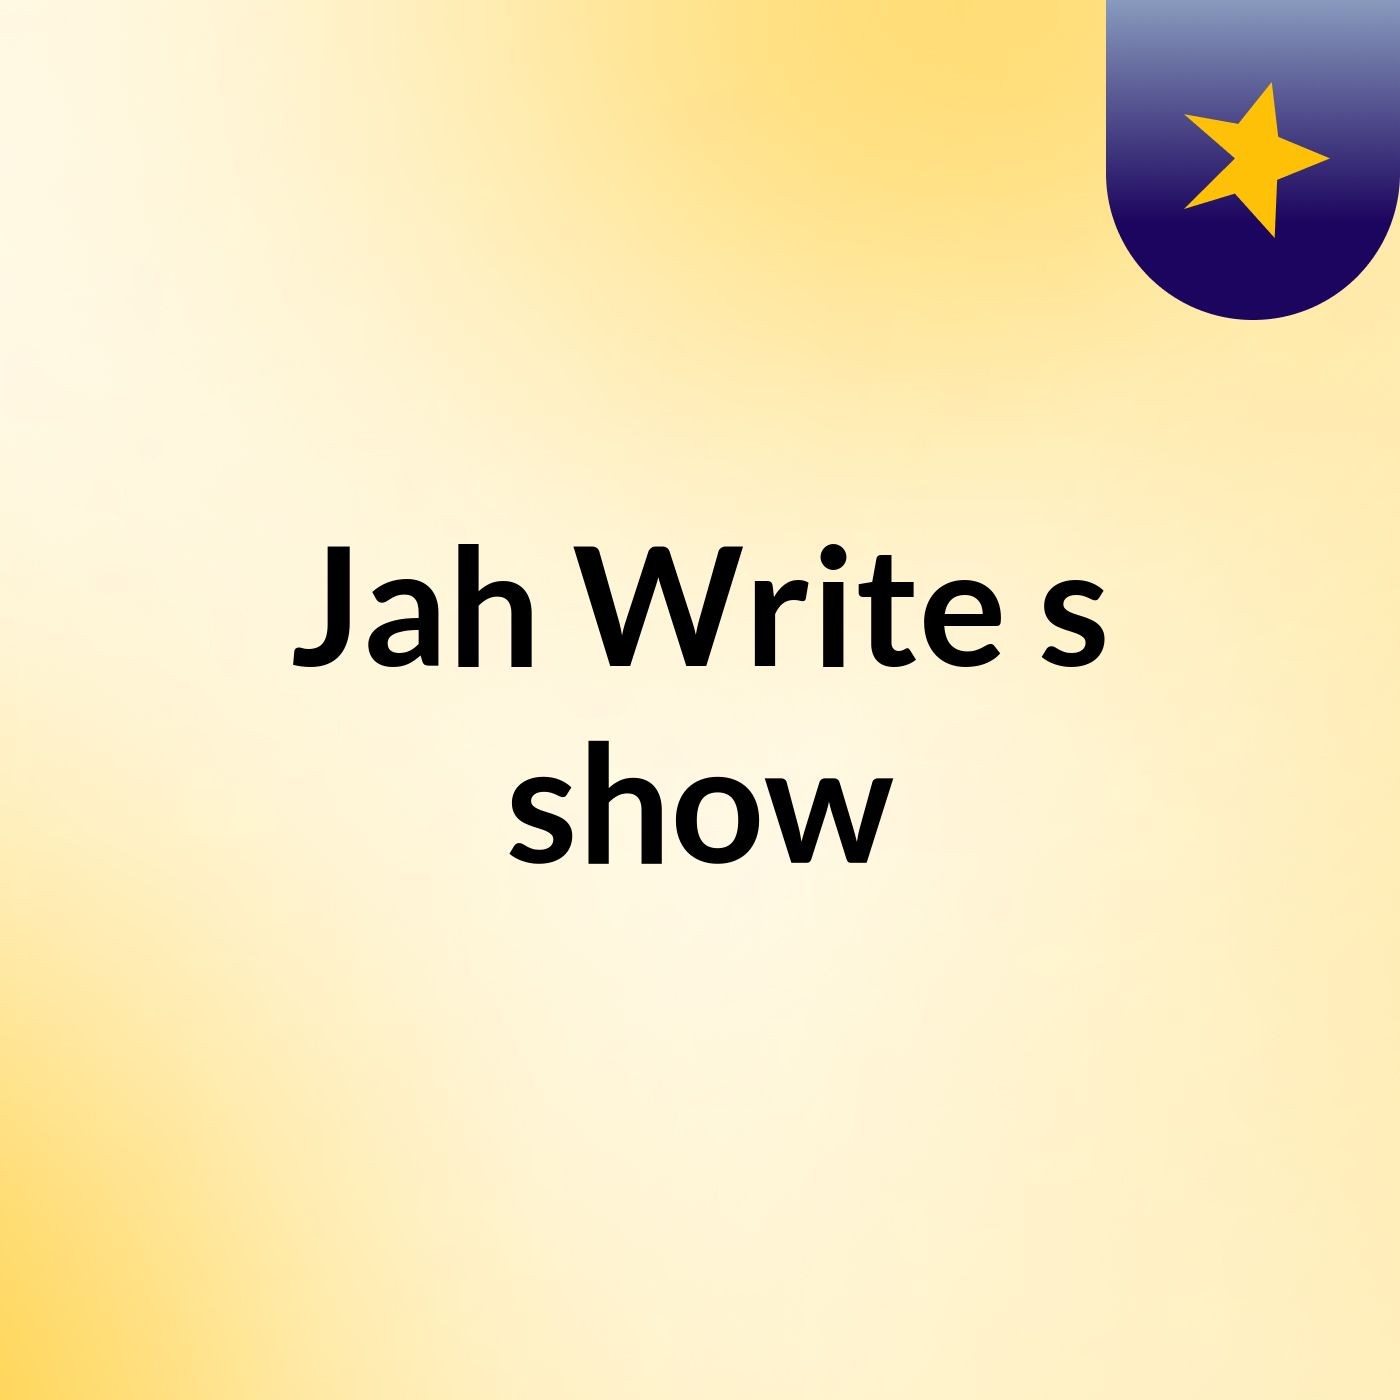 Episode 3 - Jah Write's show